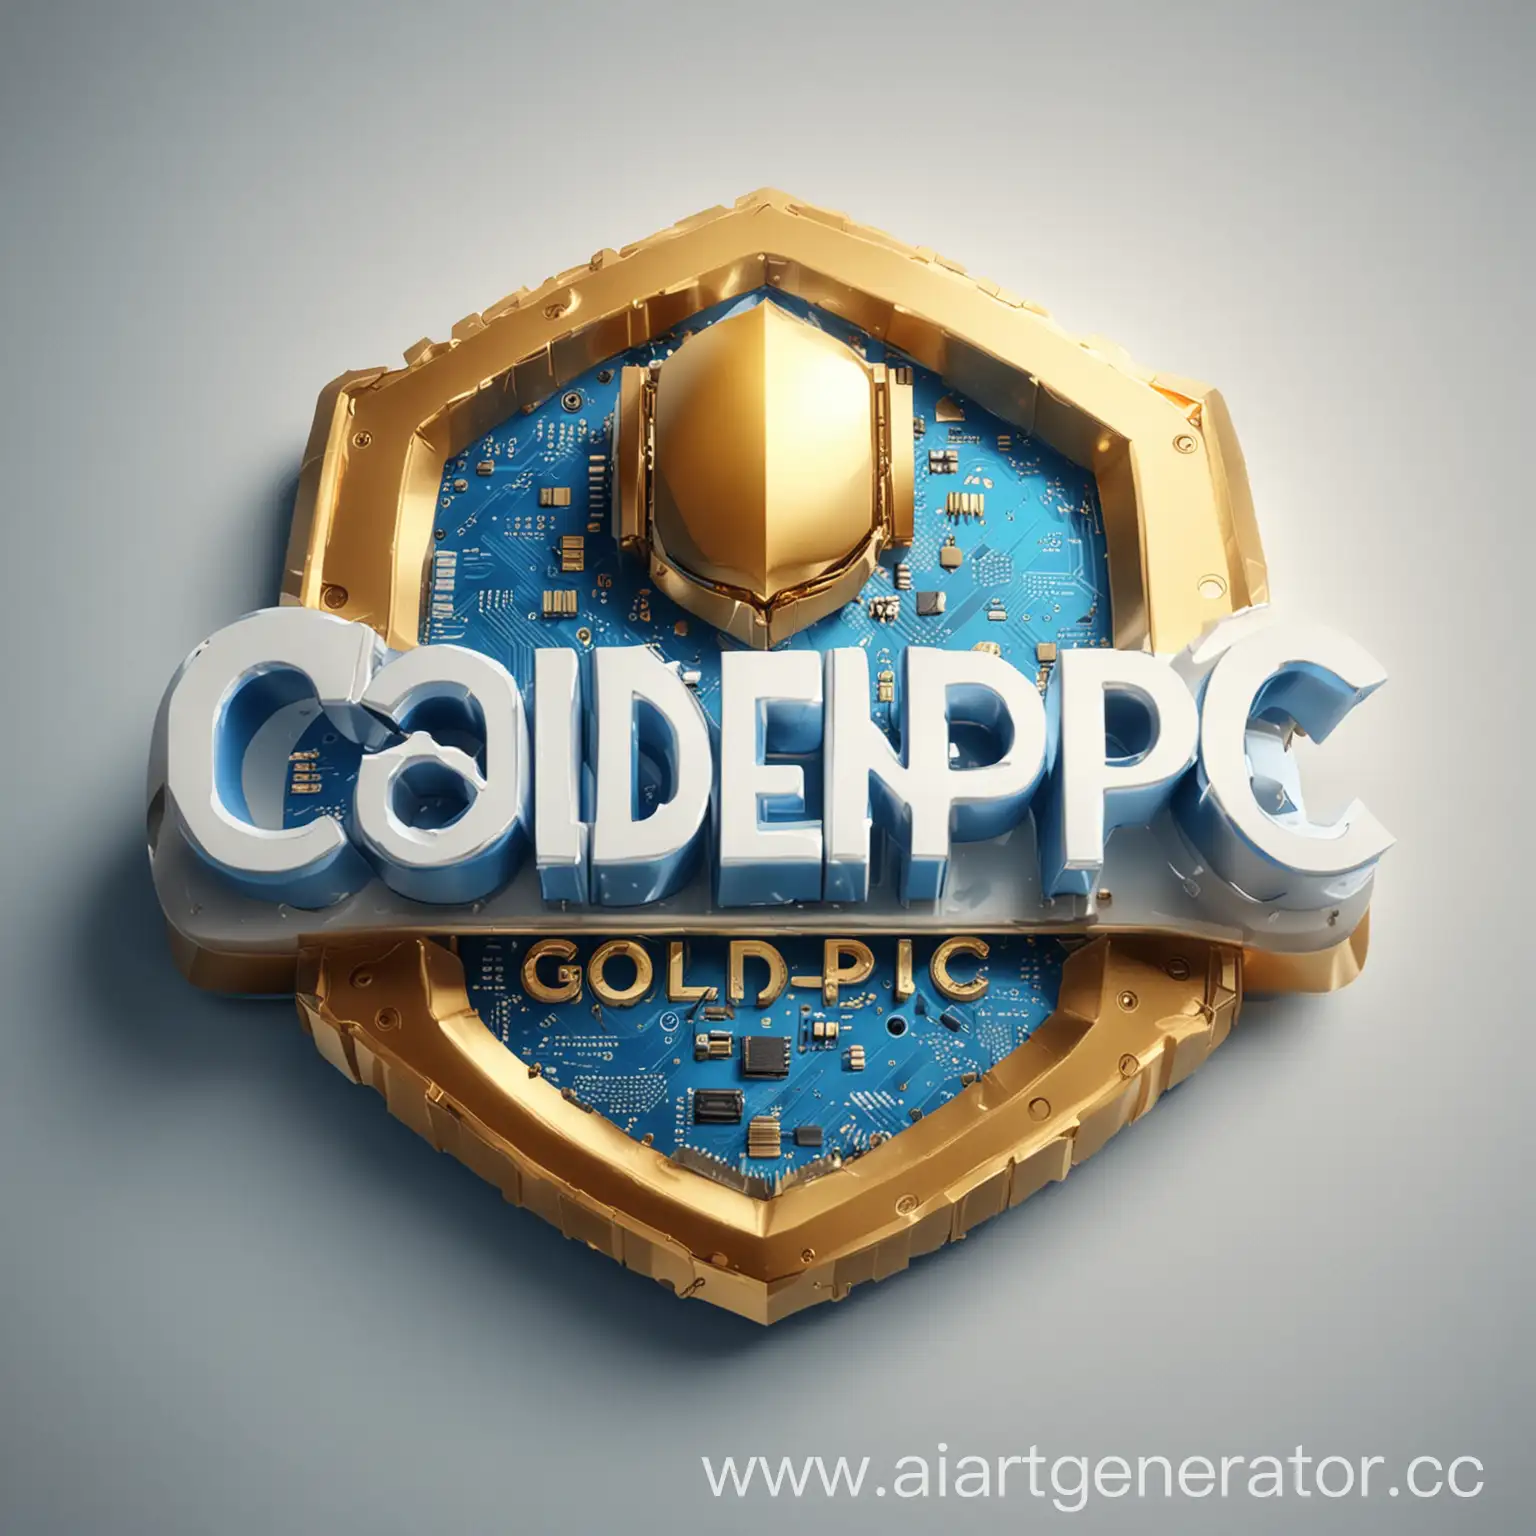 GoldenPC-Logo-Sleek-Computer-Technology-Design-in-Golden-and-Blue-on-White-Background